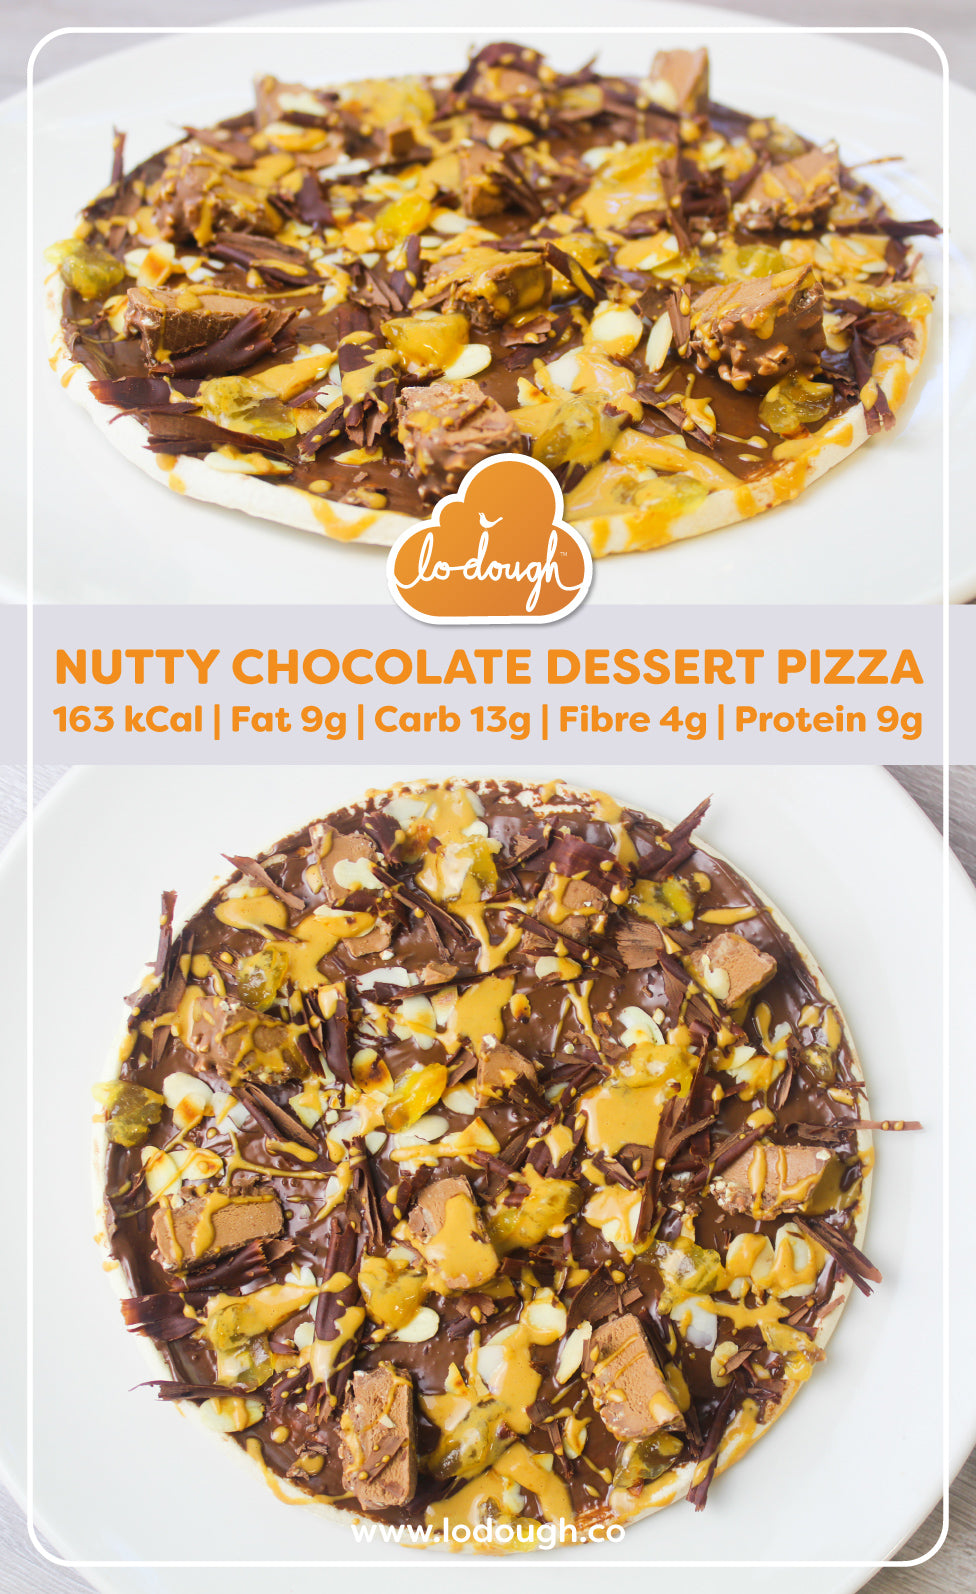 Chocolate and Nut Dessert Pizza